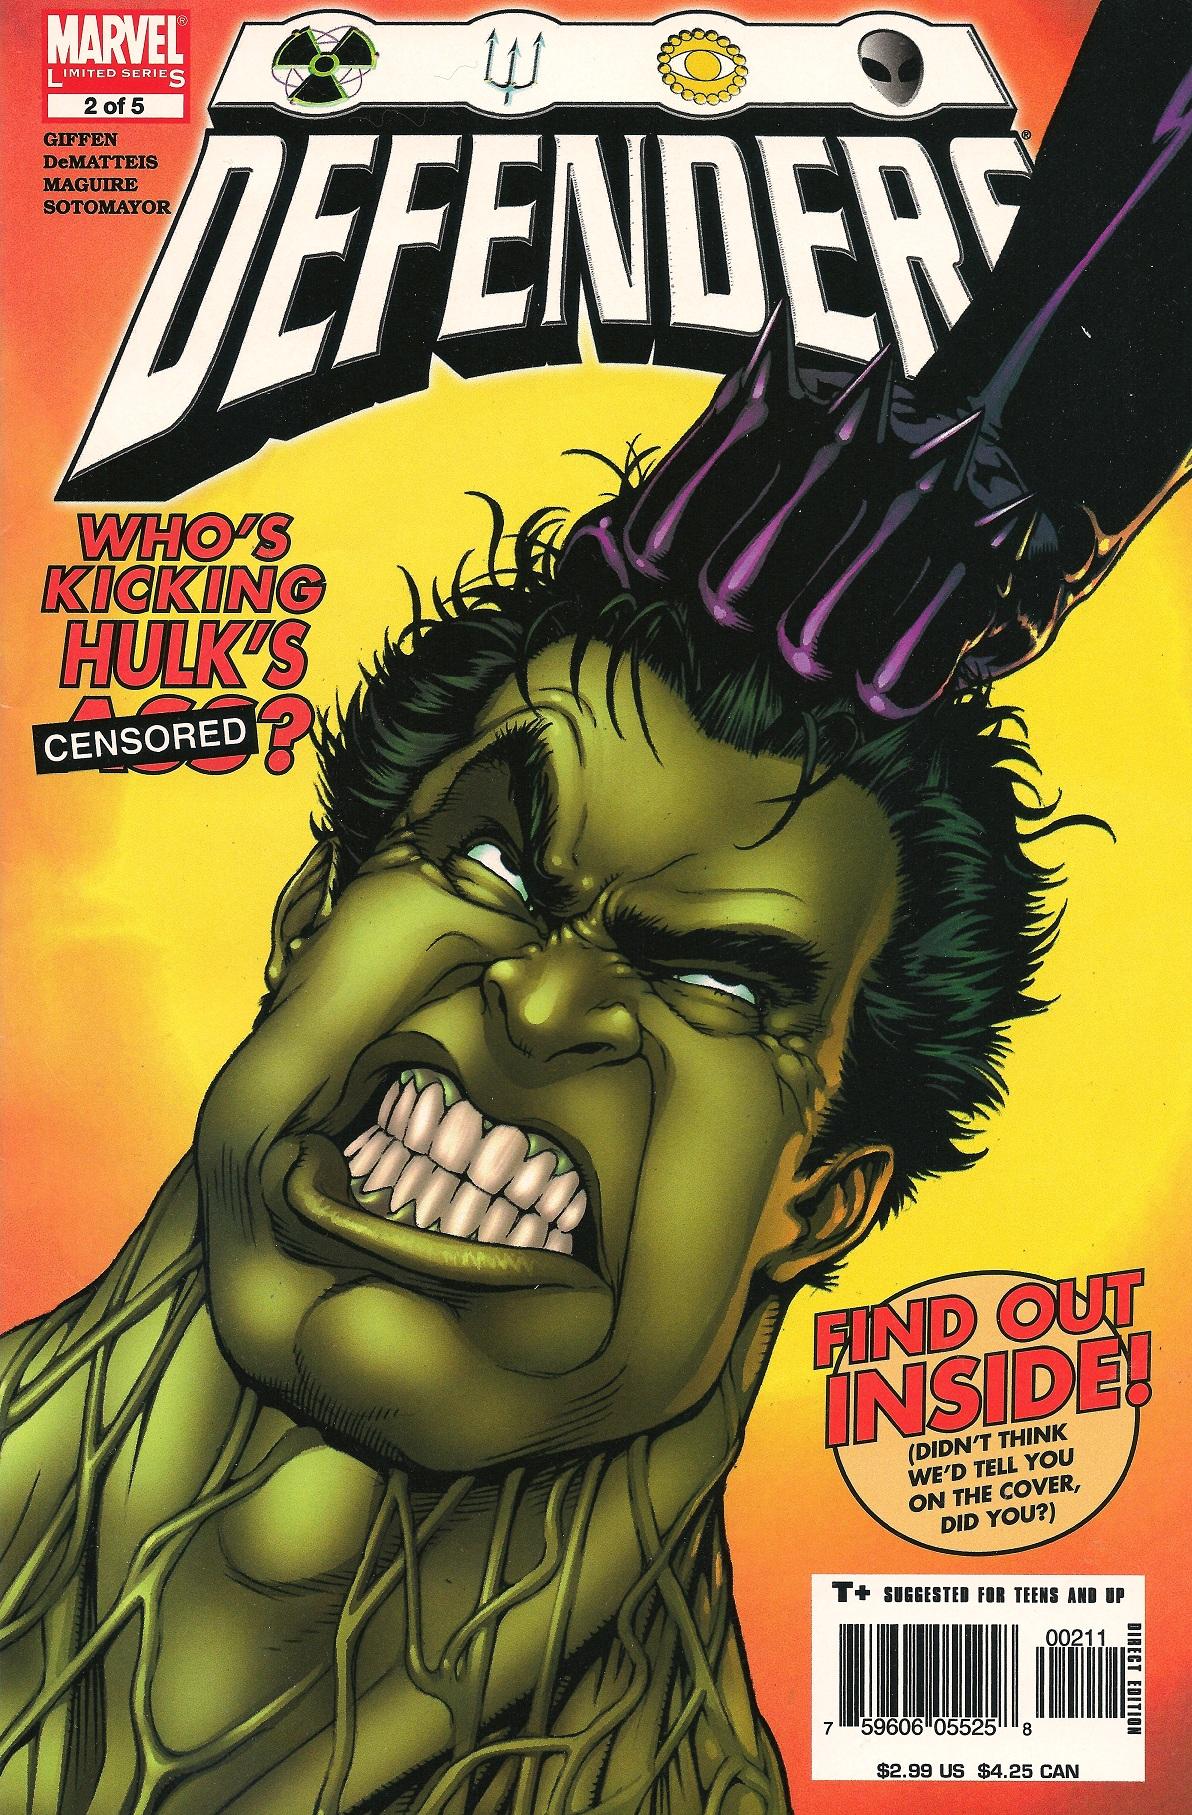 The Defenders Vol. 3 #2